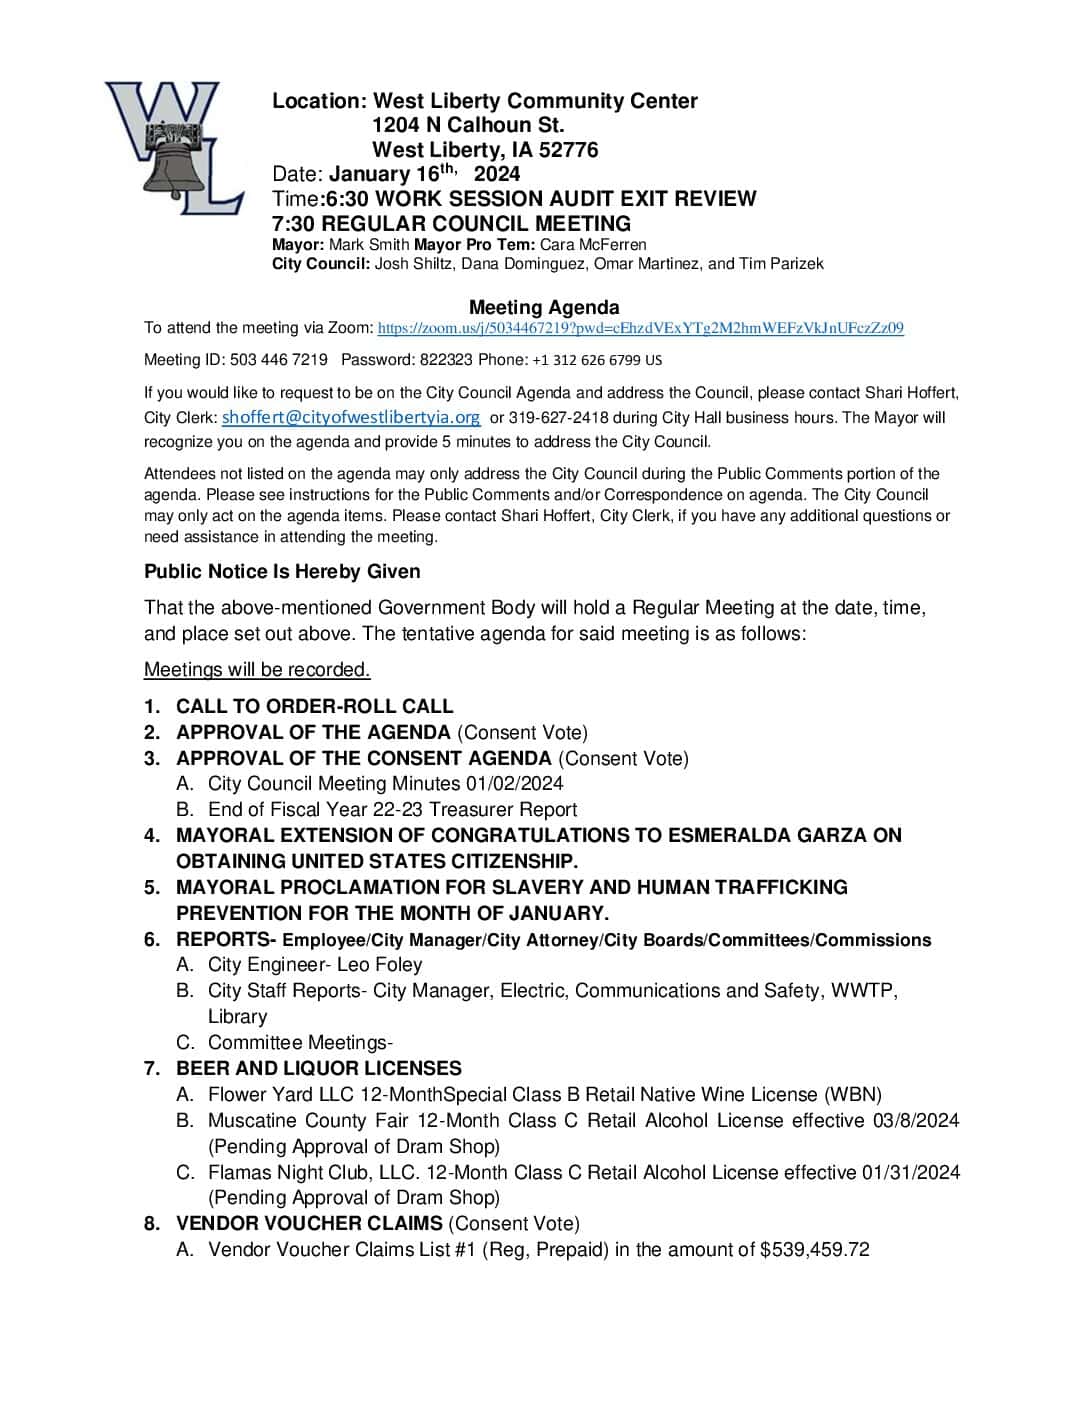 Meeting Agenda 01-16-2024 - City of West Liberty